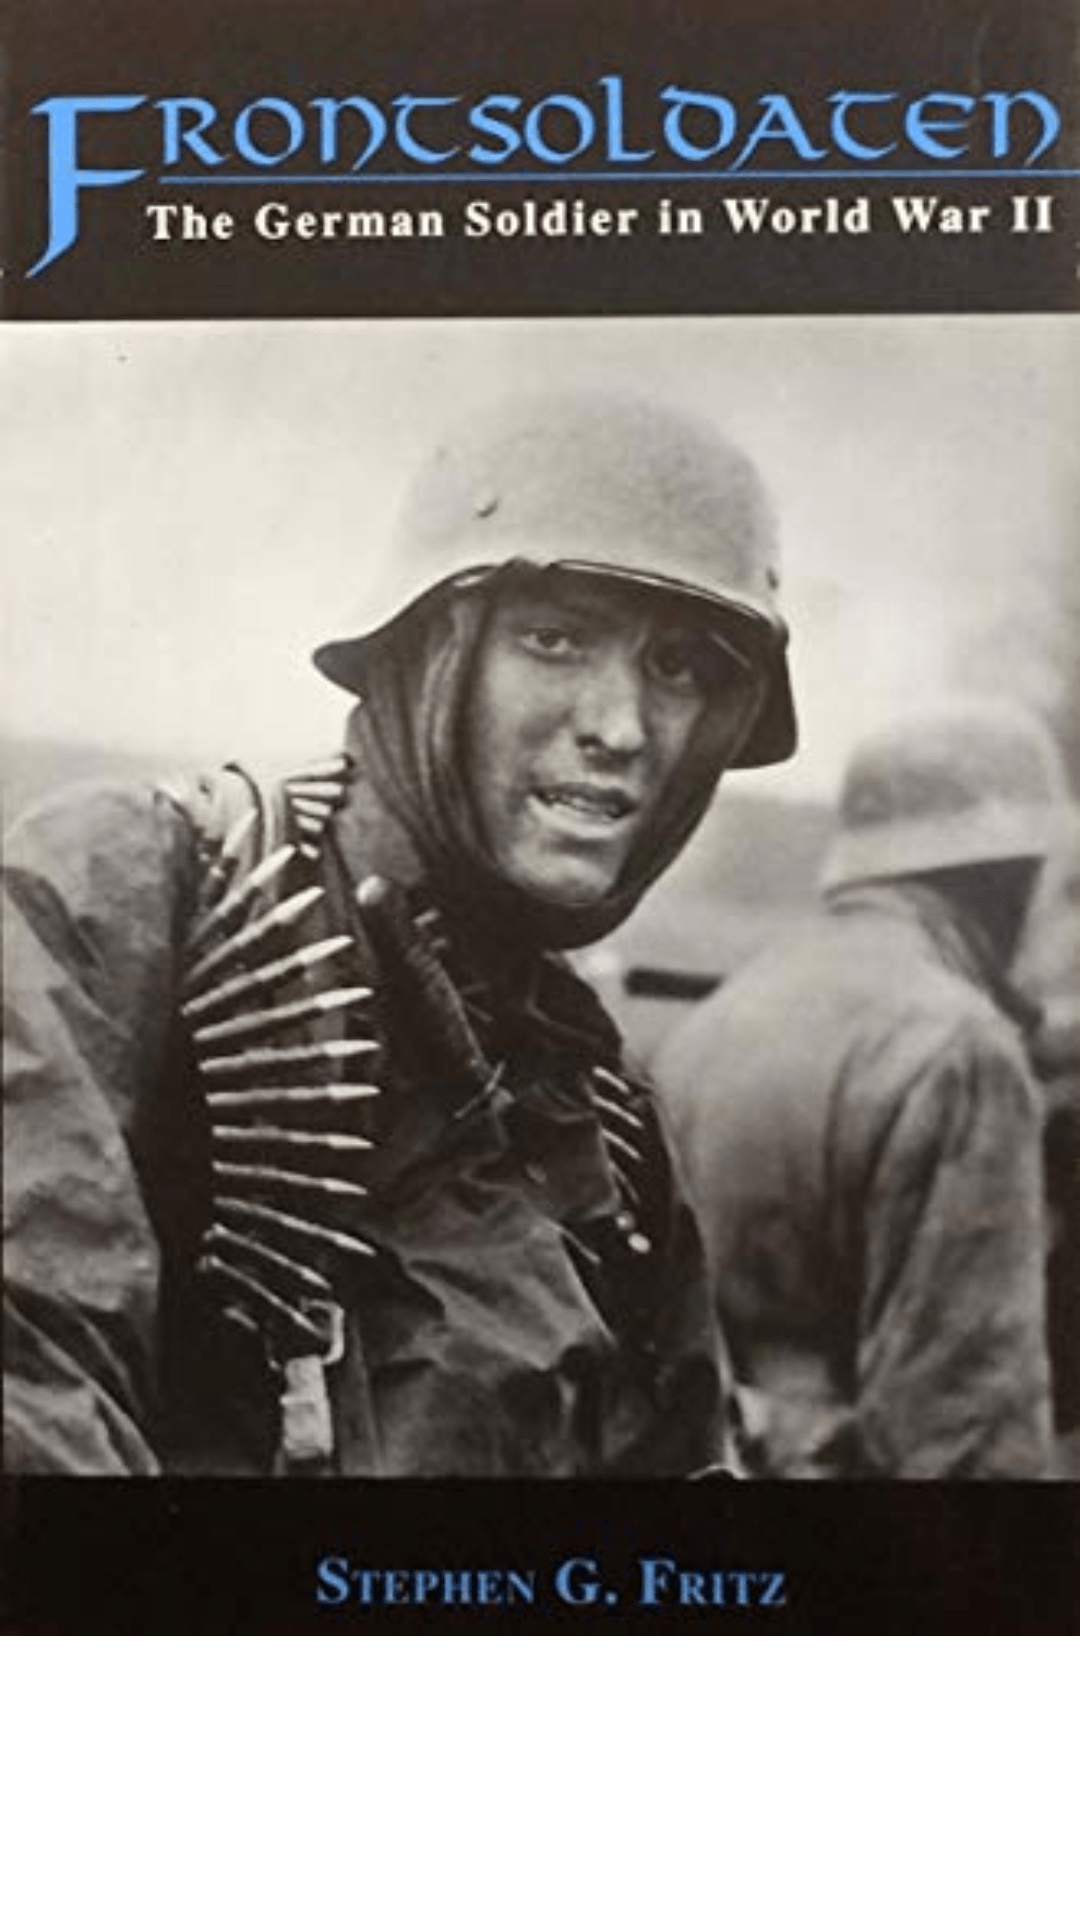 Frontsoldaten: the German Soldier in World War II